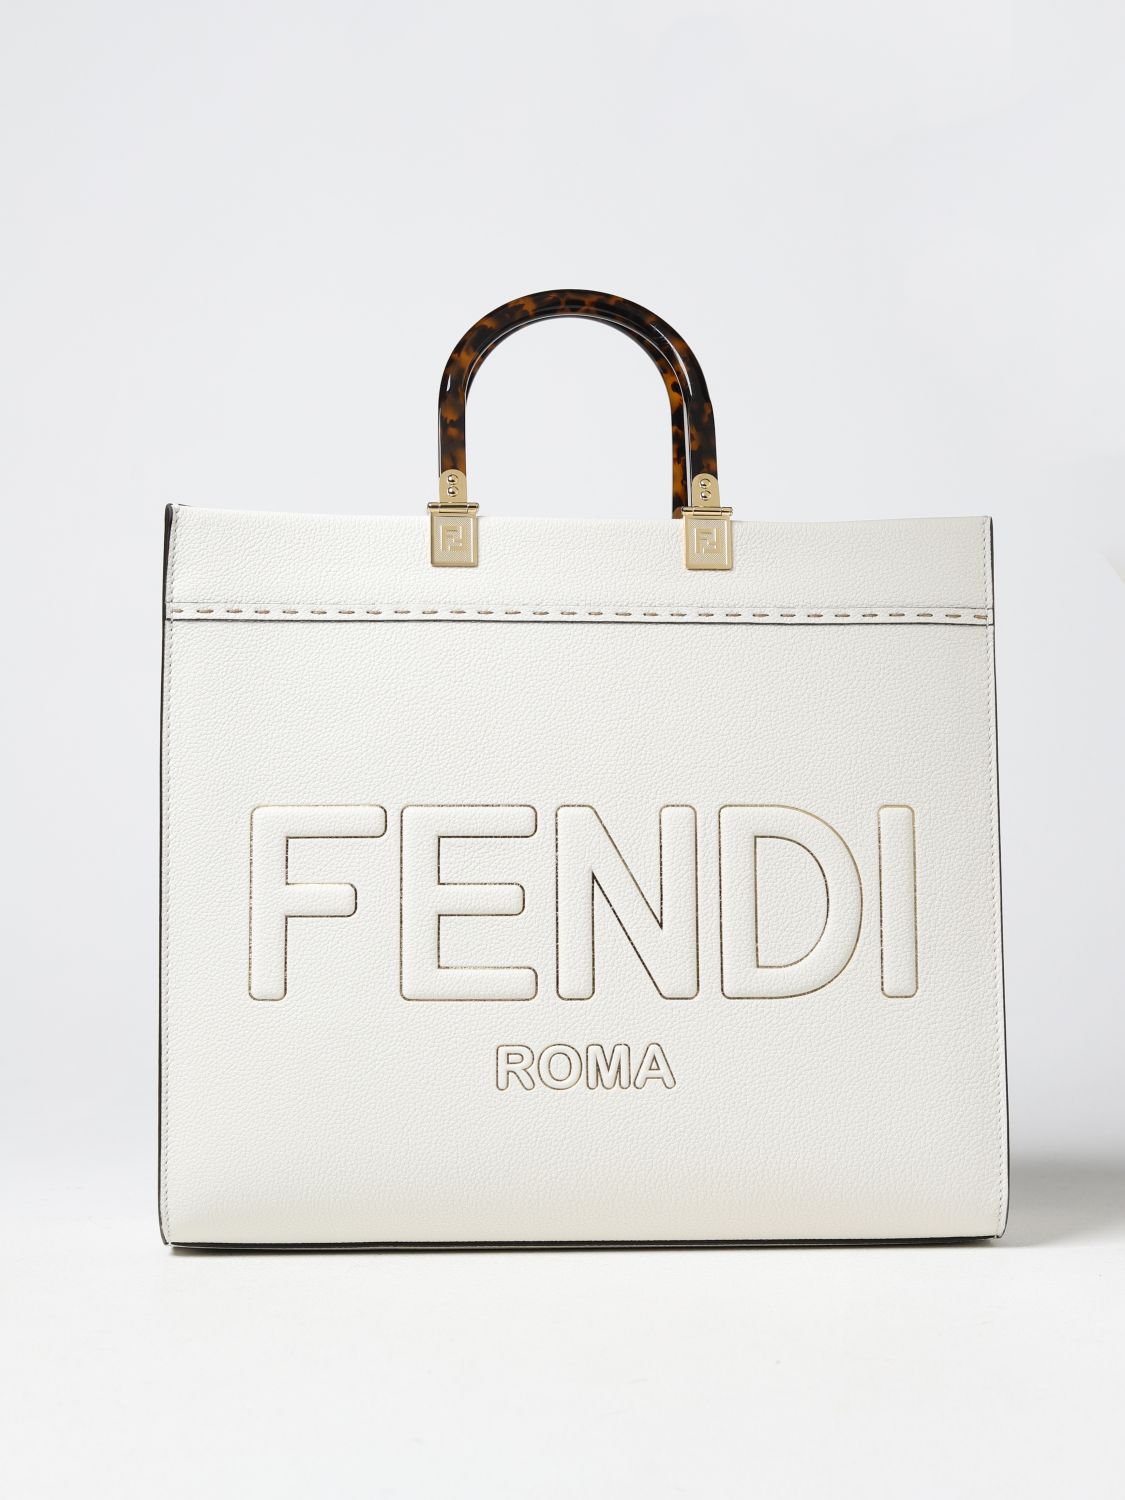 FENDI ROMA Tote bag for Women